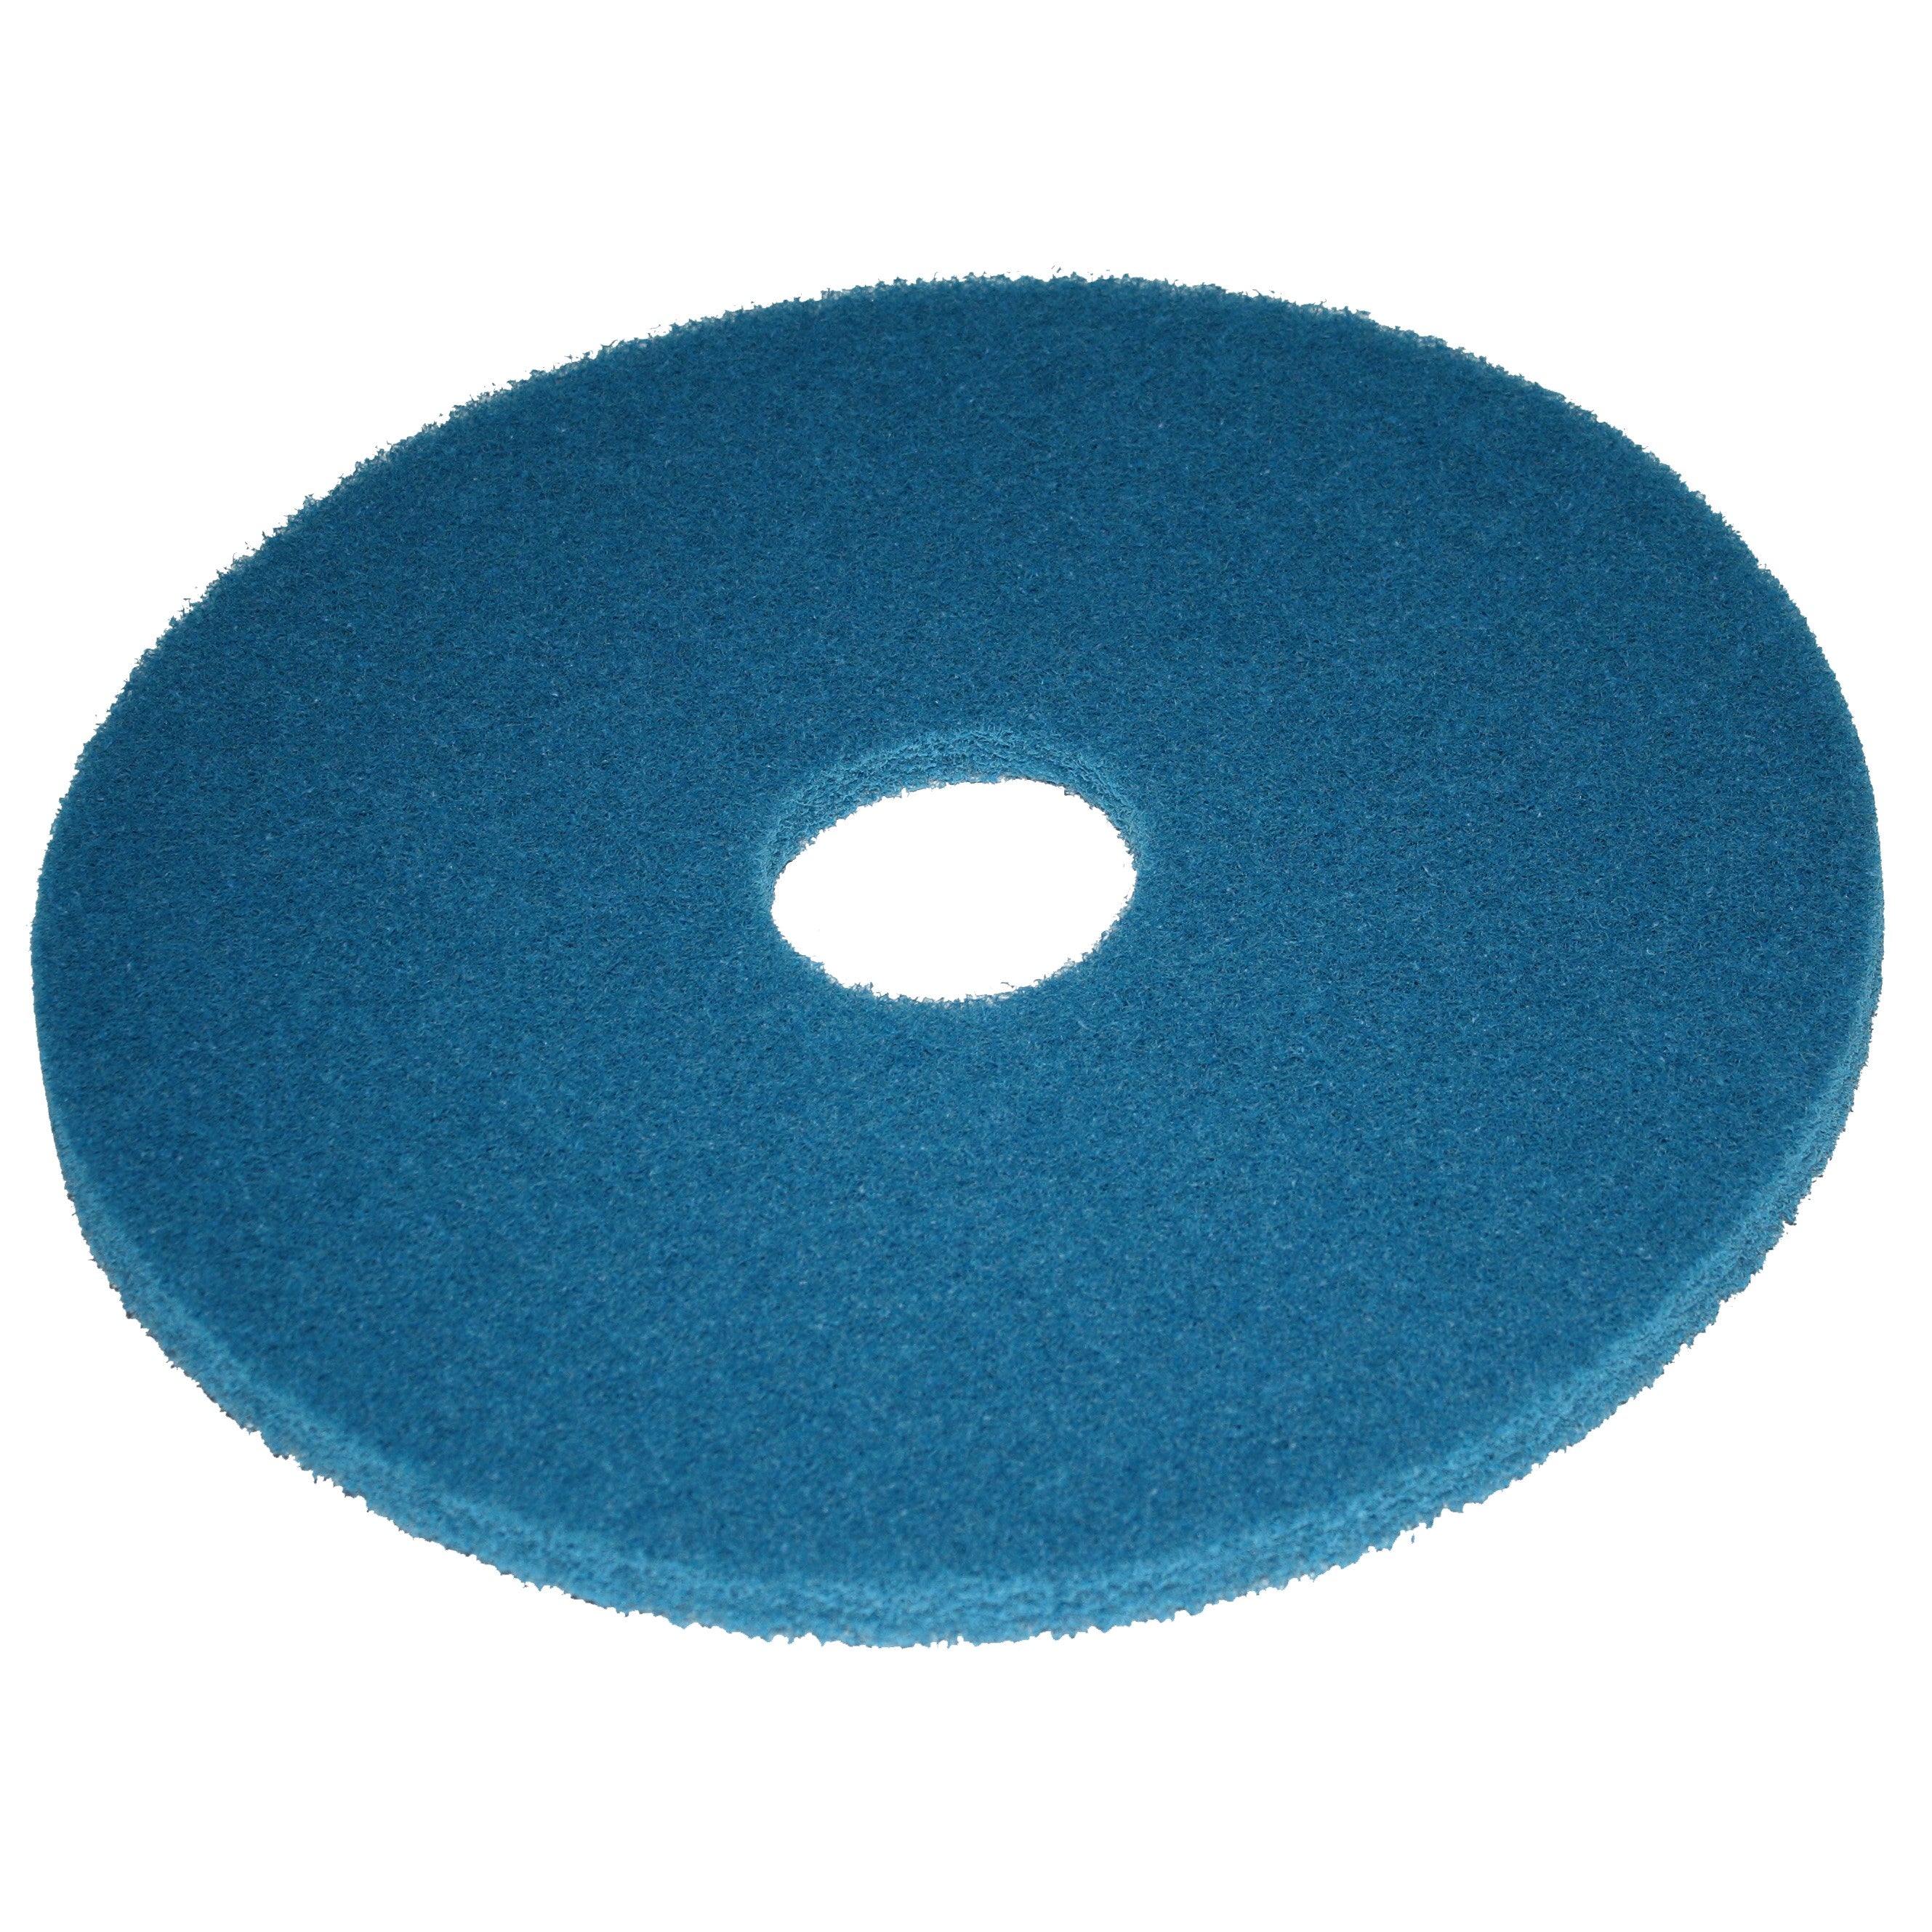 Pad blau, Ø 355 mm, Polyester